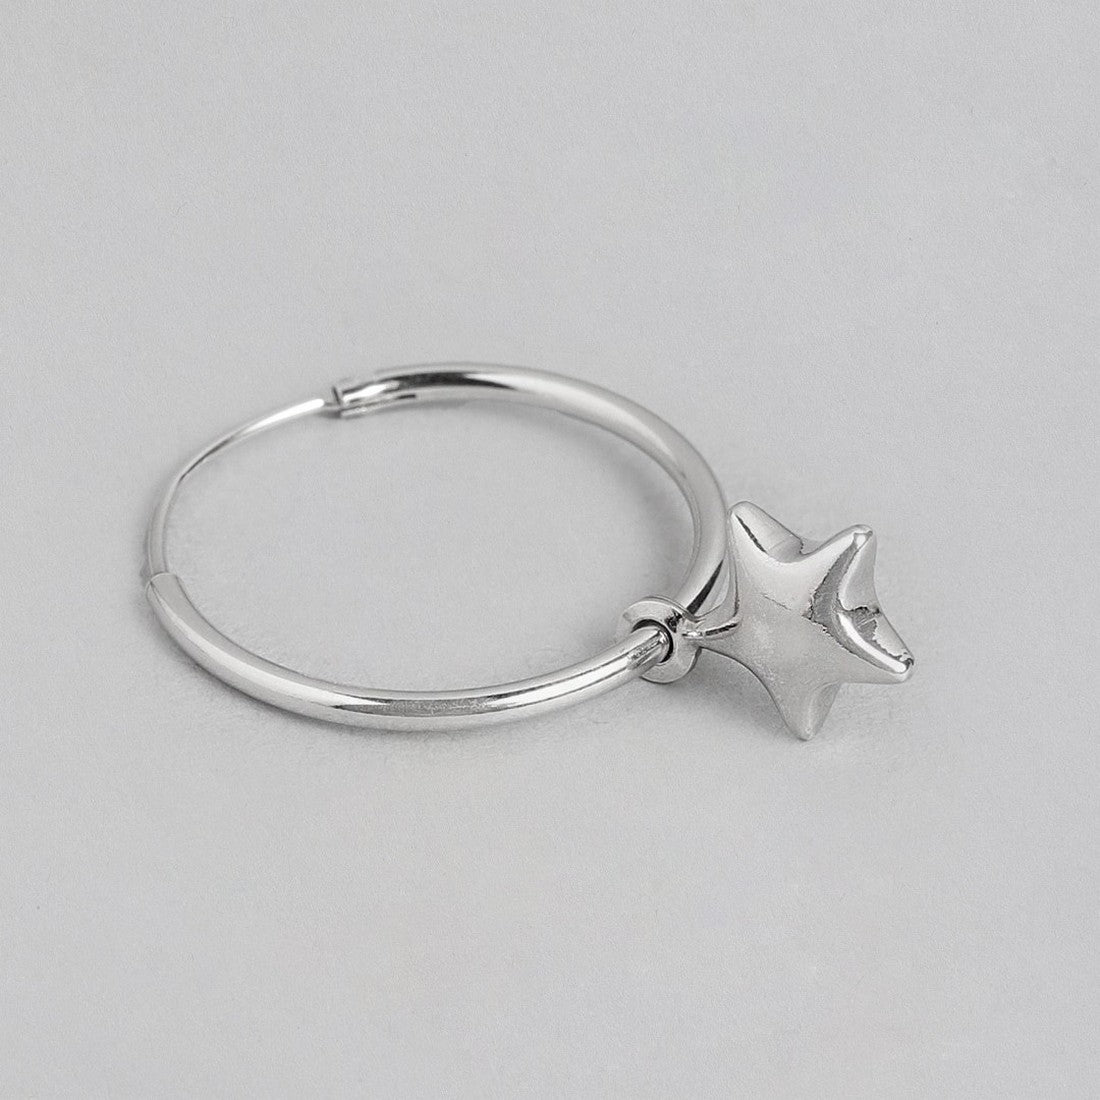 Stellar Drops 925 Sterling Silver Hoop Earrings with Drop-Stars